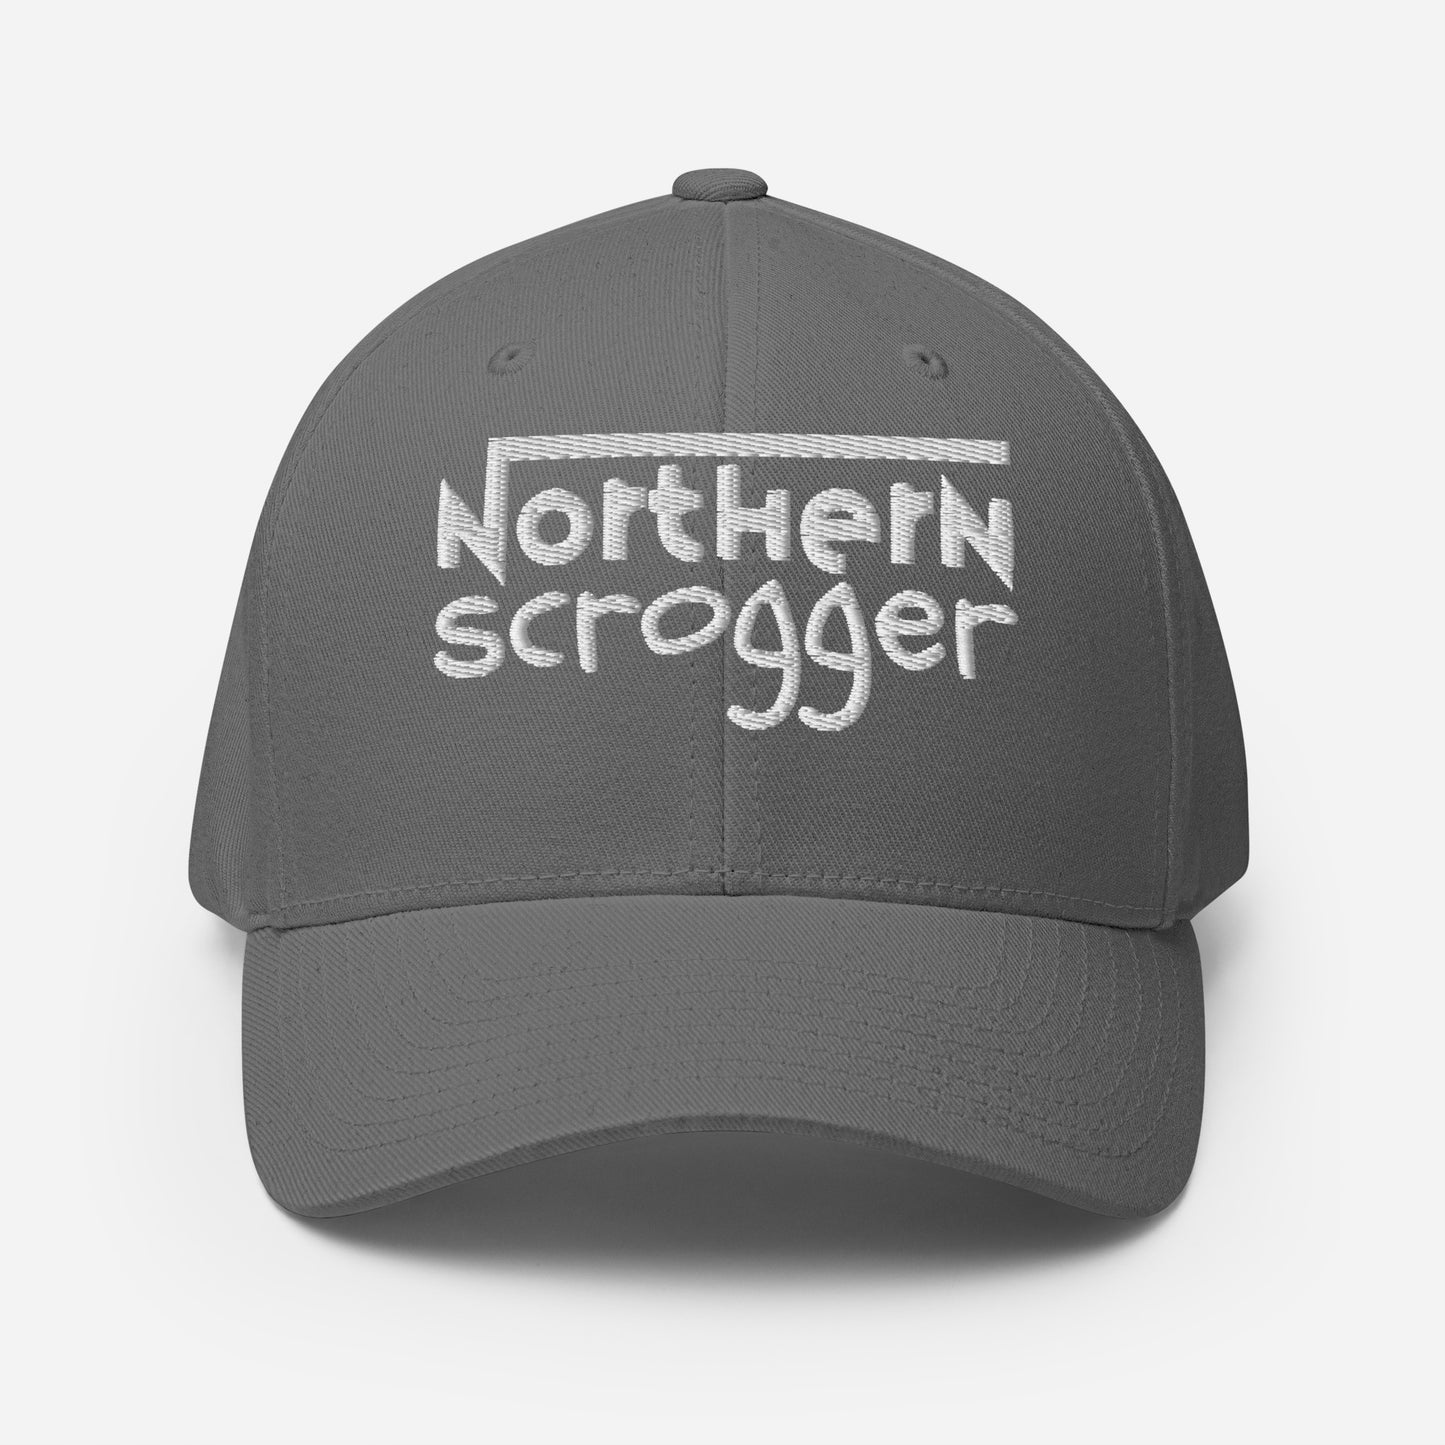 Northern Scrogger Discreet Logo- Flexfit hat